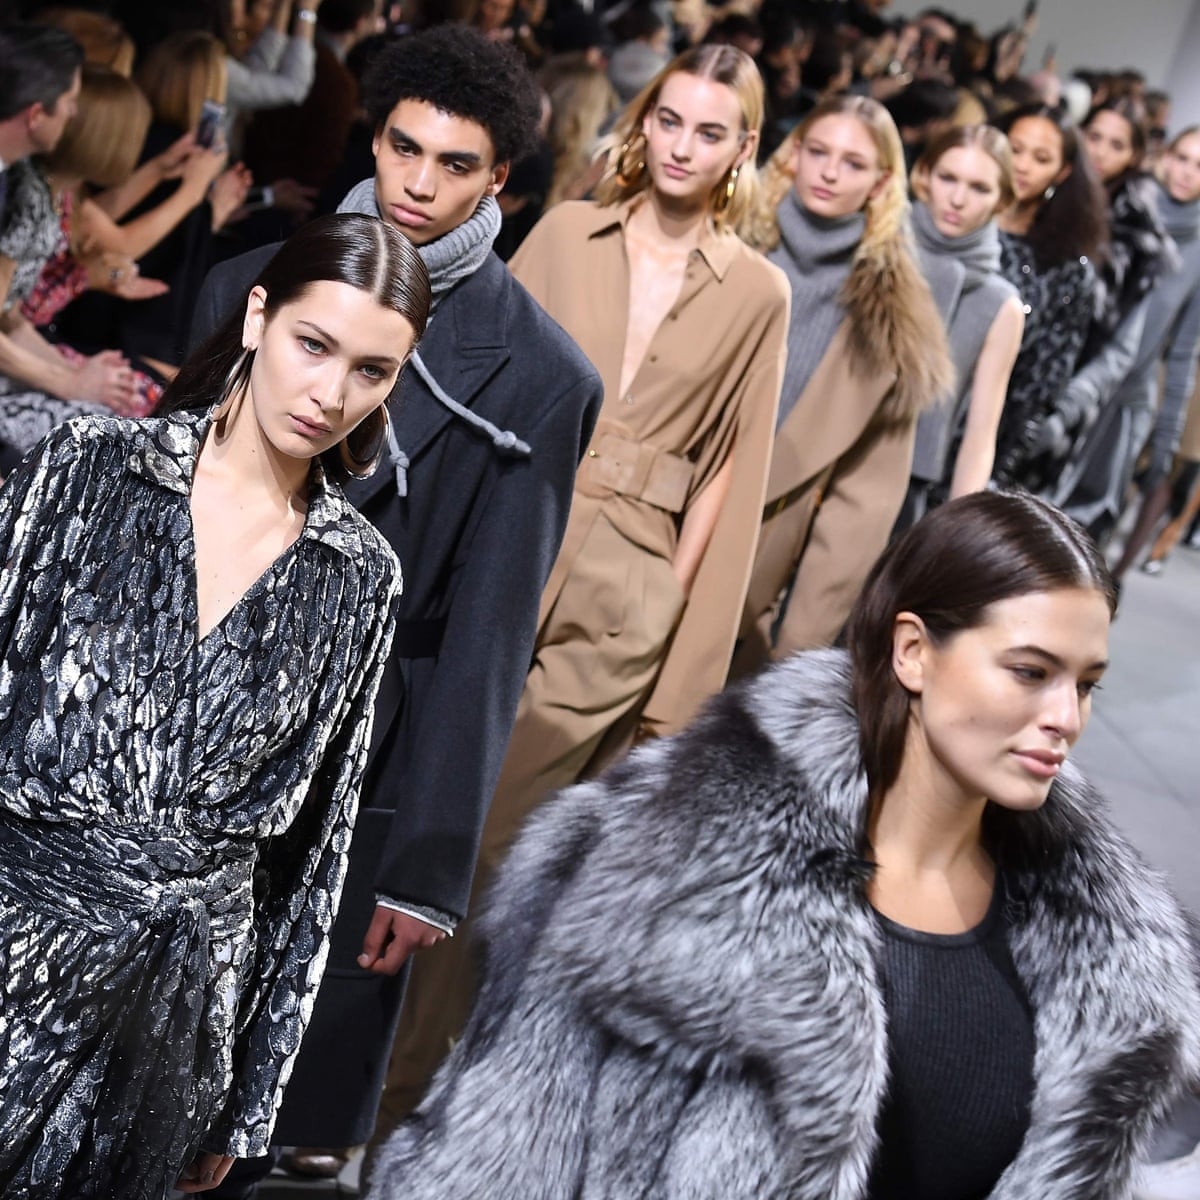 US fashion brand Michael Kors to stop using animal fur | Fashion industry |  The Guardian